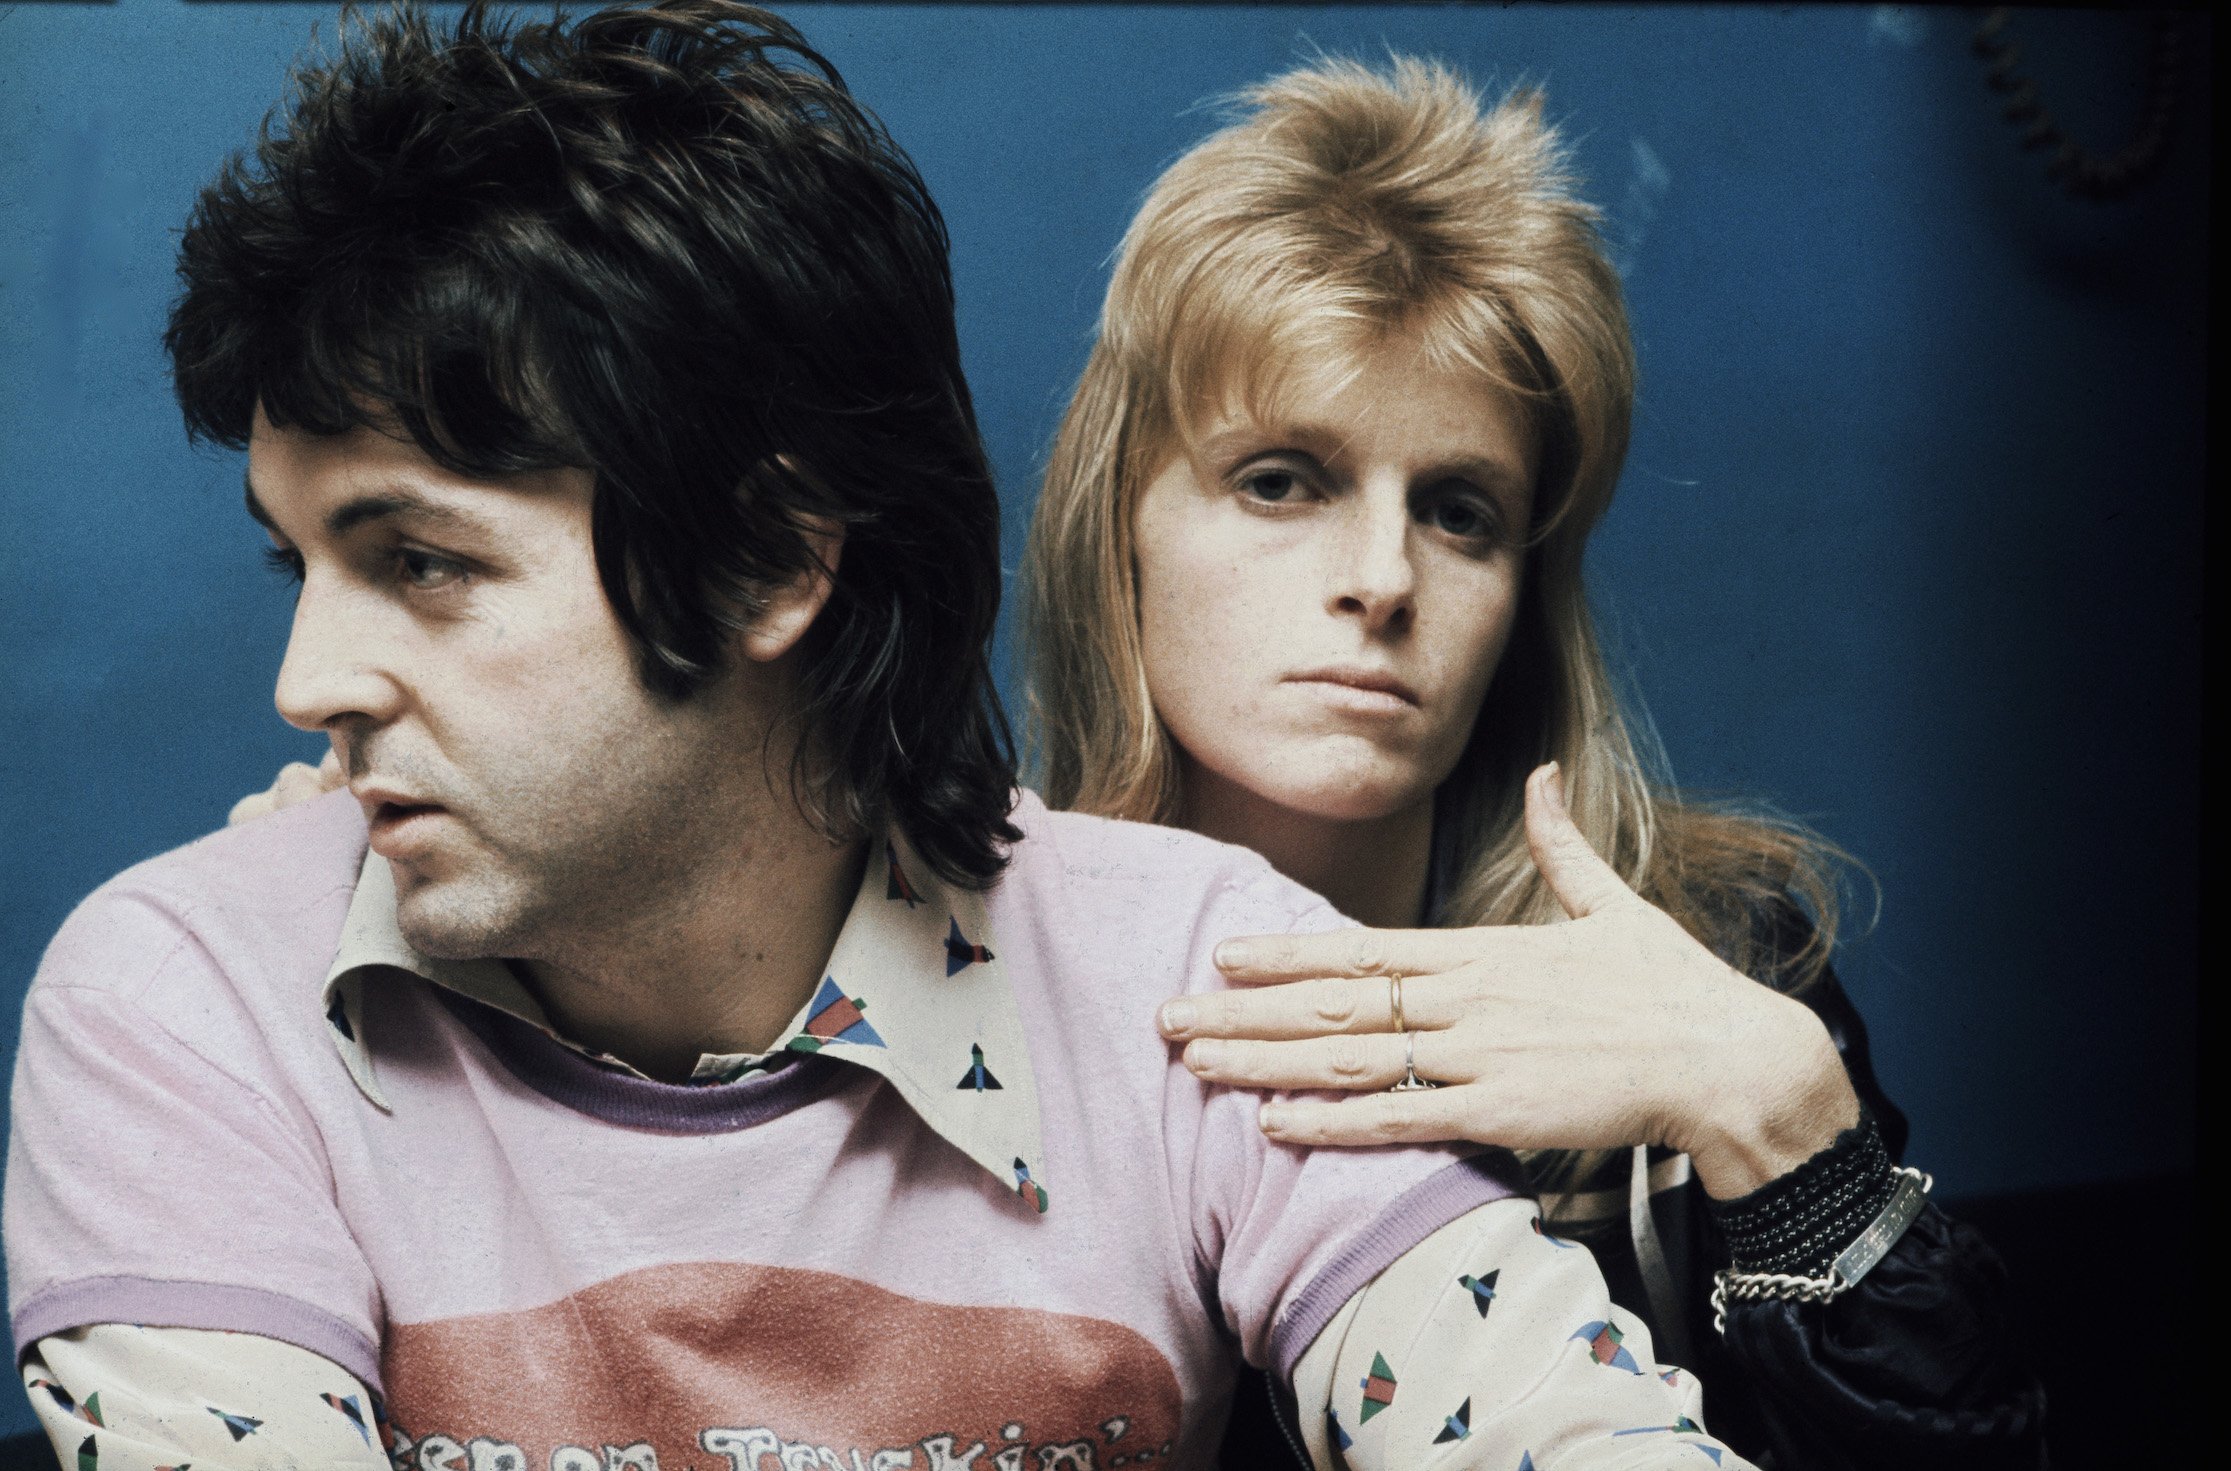 Paul McCartney and Linda McCartney in 1973